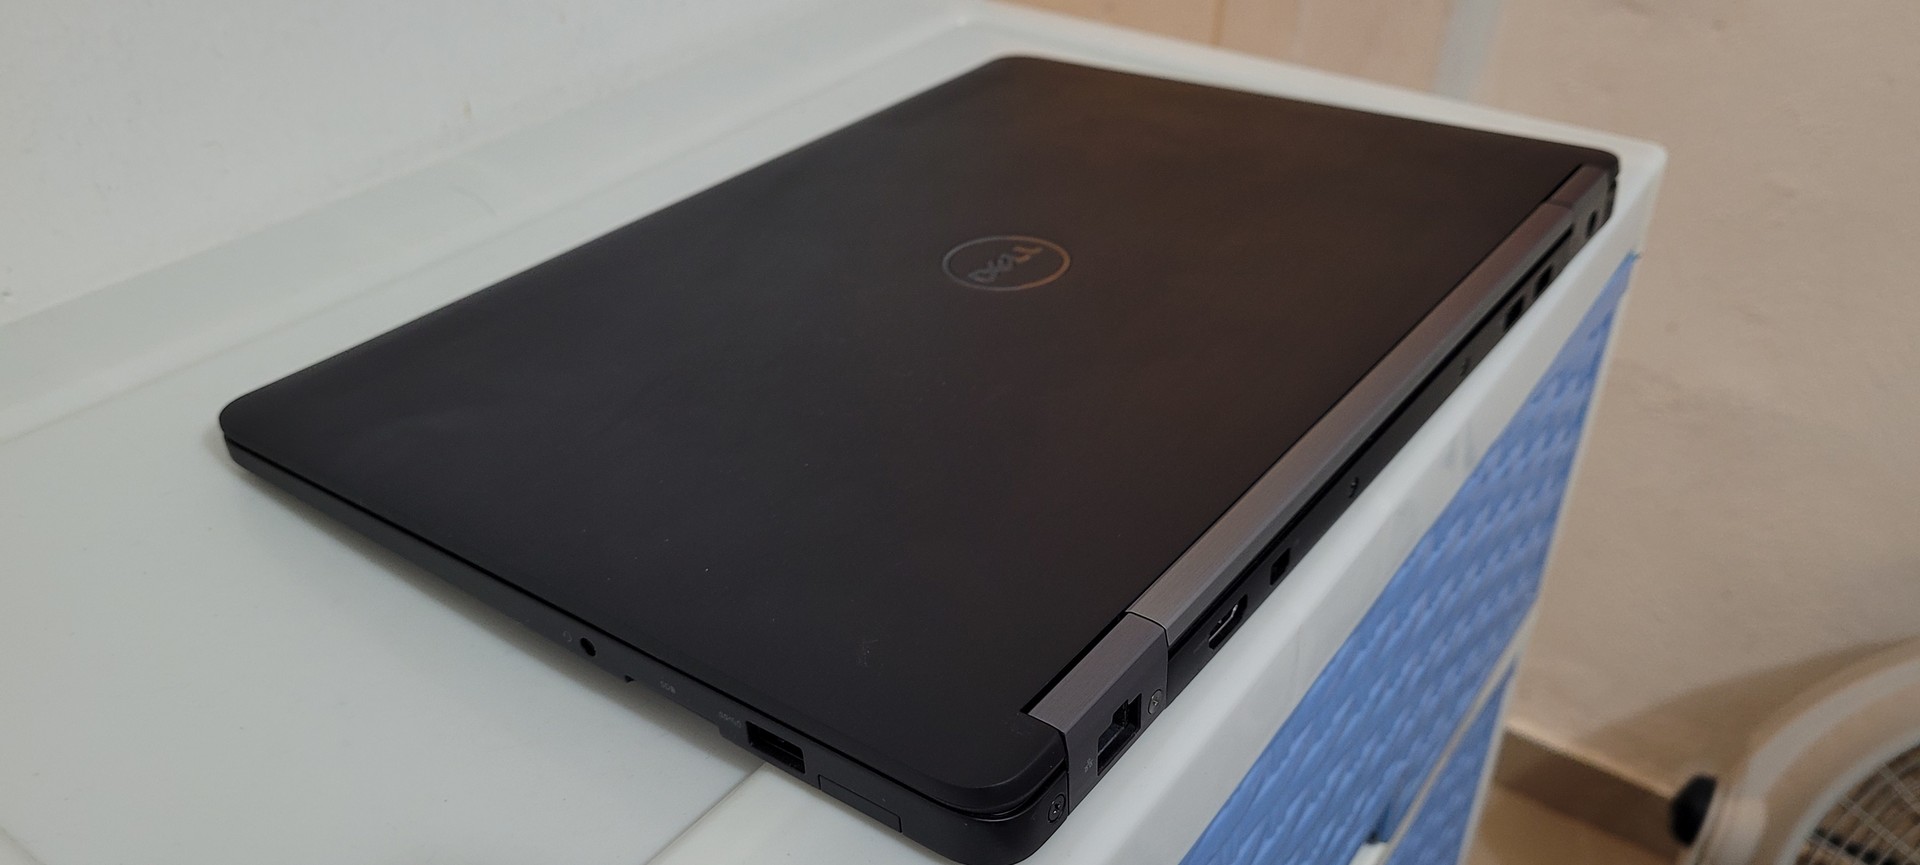 computadoras y laptops - Dell 5470 14 Pulg Core i7 6ta Gen Ram 8gb ddr4 Disco 256gb SSD Solido new 2